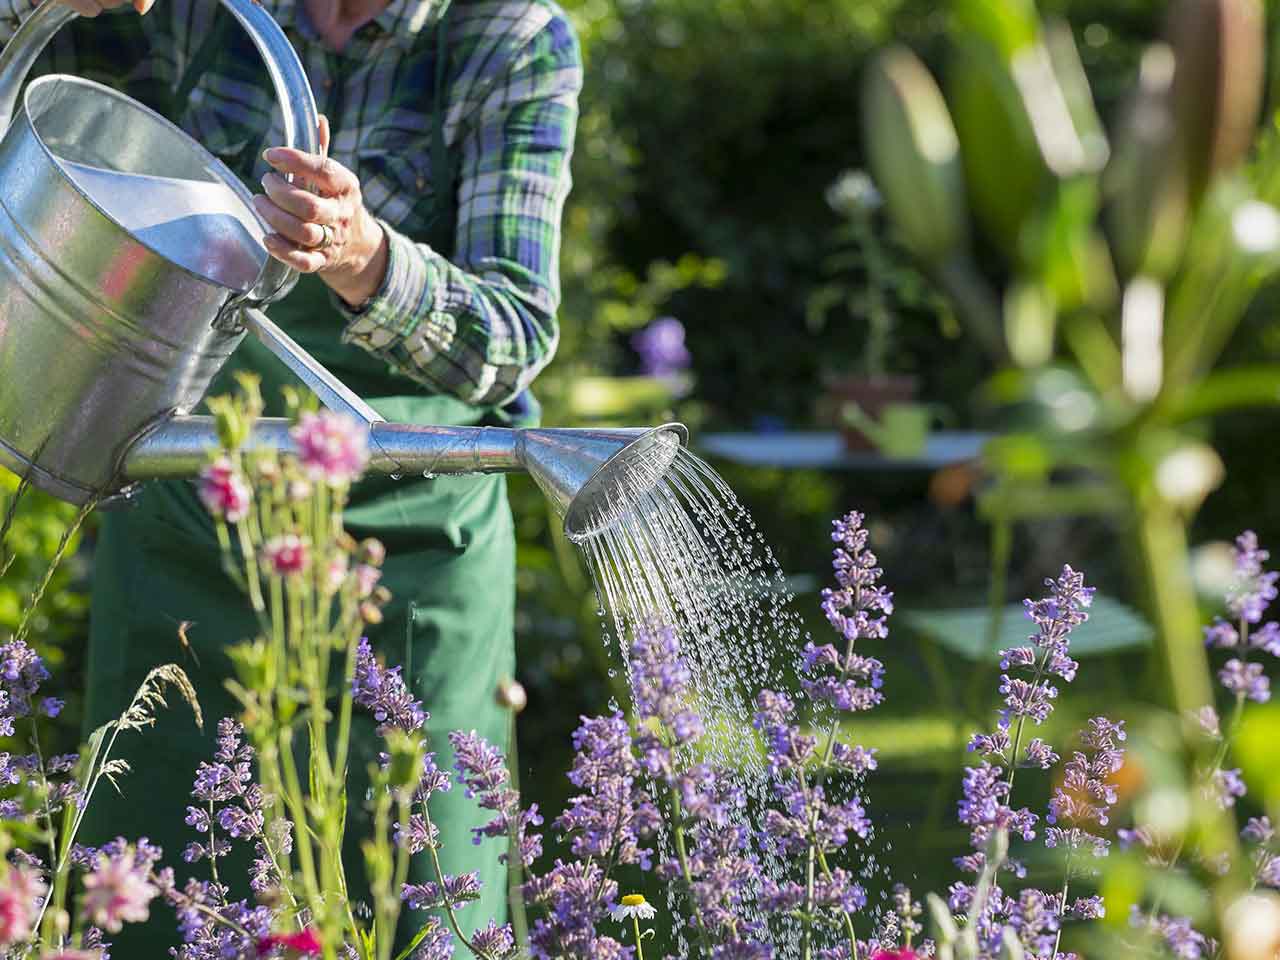 Older woman gardening to improve health